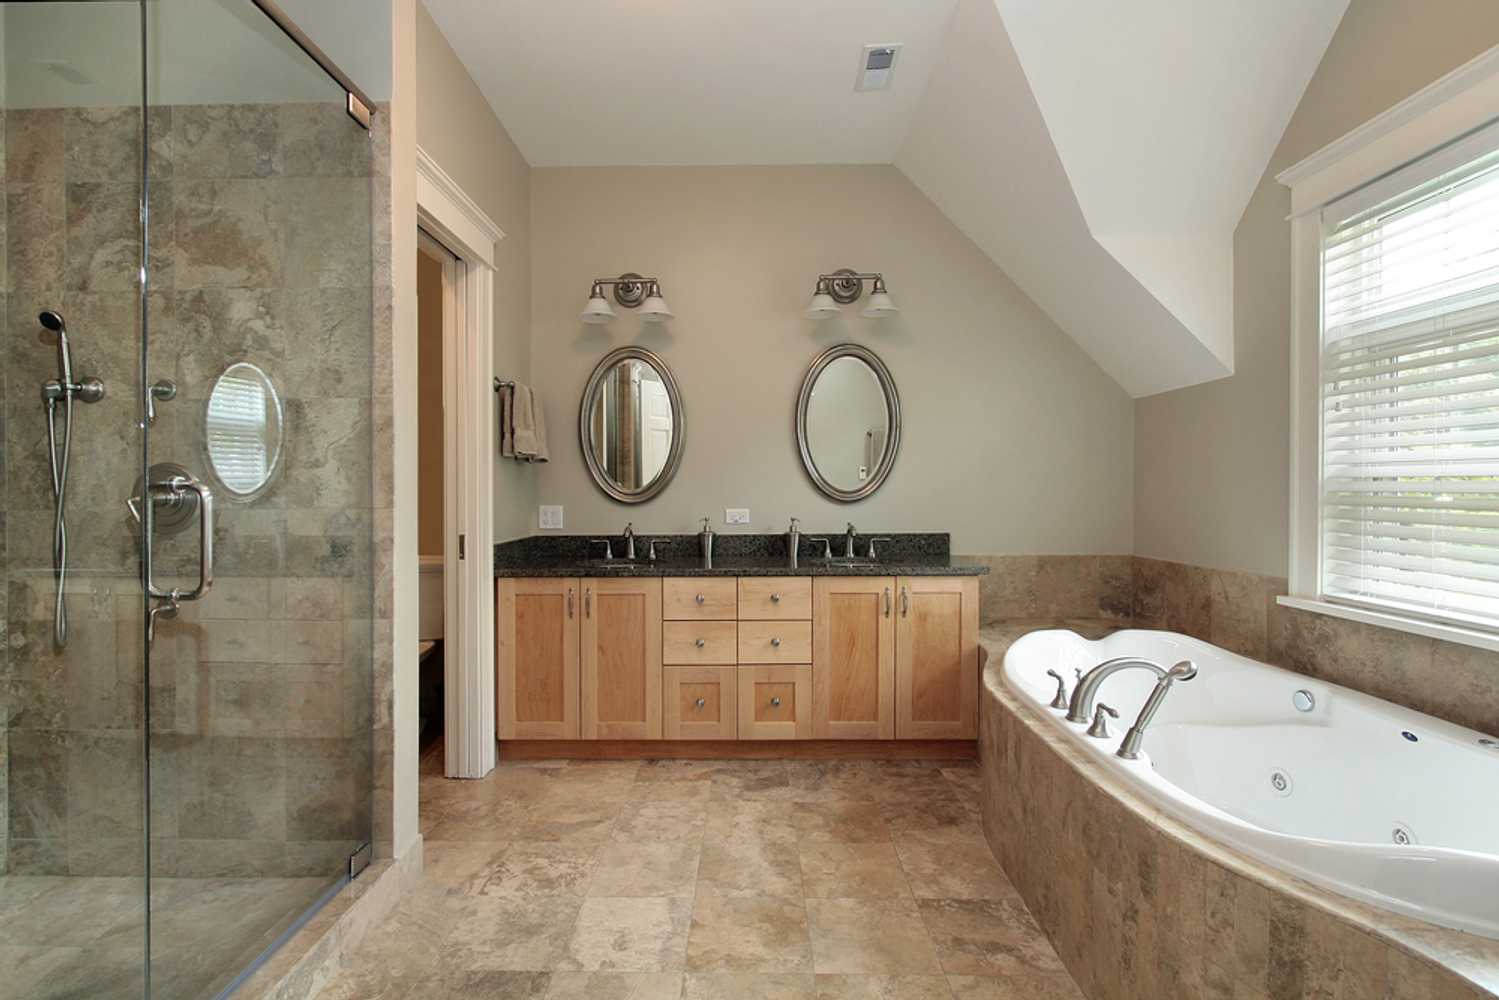 Bathroom Design & Remodeling Project Photos by OTM Designs & Remodeling Inc.